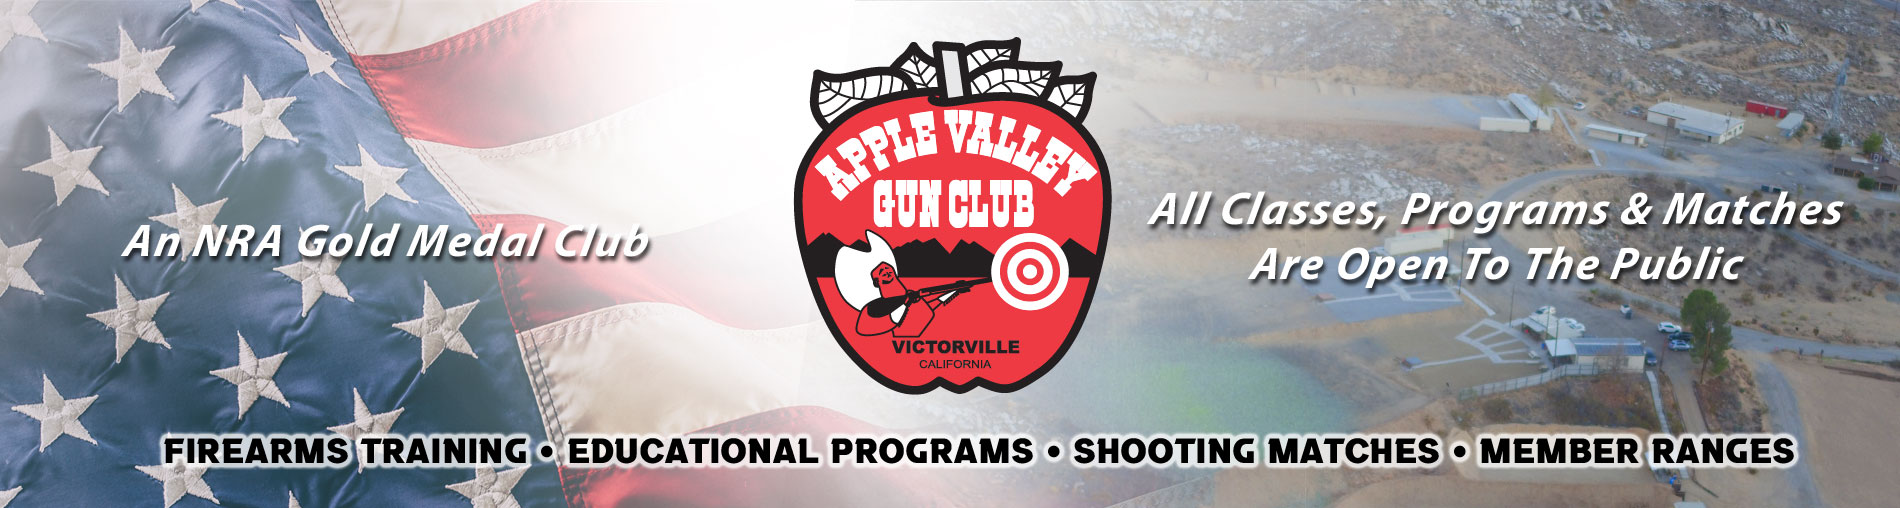 Apple Valley Gun Club